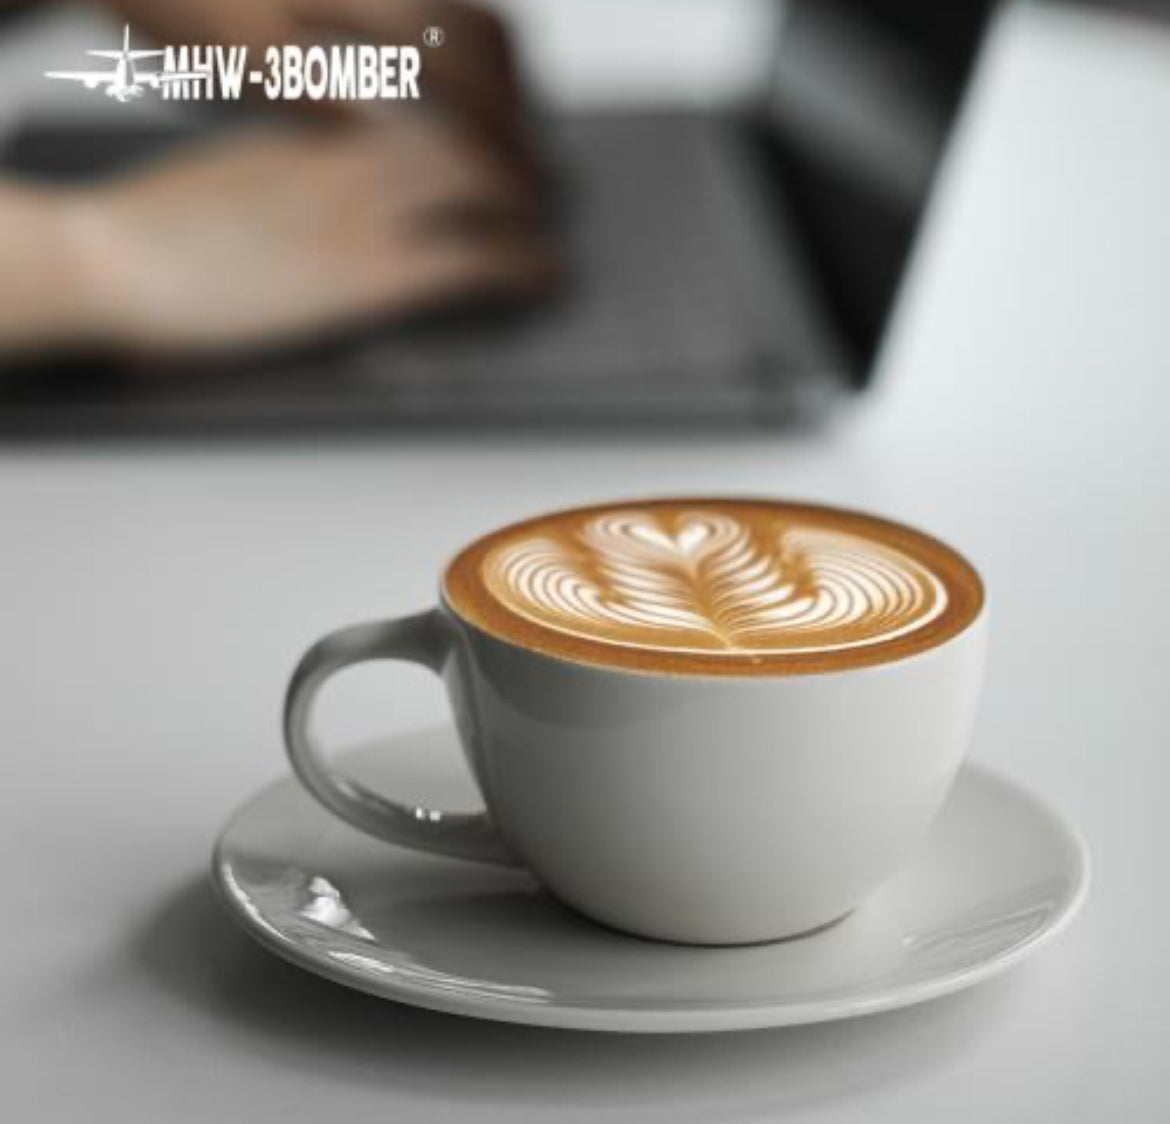 MHW 3BOMBER Mars Serie Kaffee - Keramiktasse 300 ml Tiffany Blue - Coffee Coaching Club